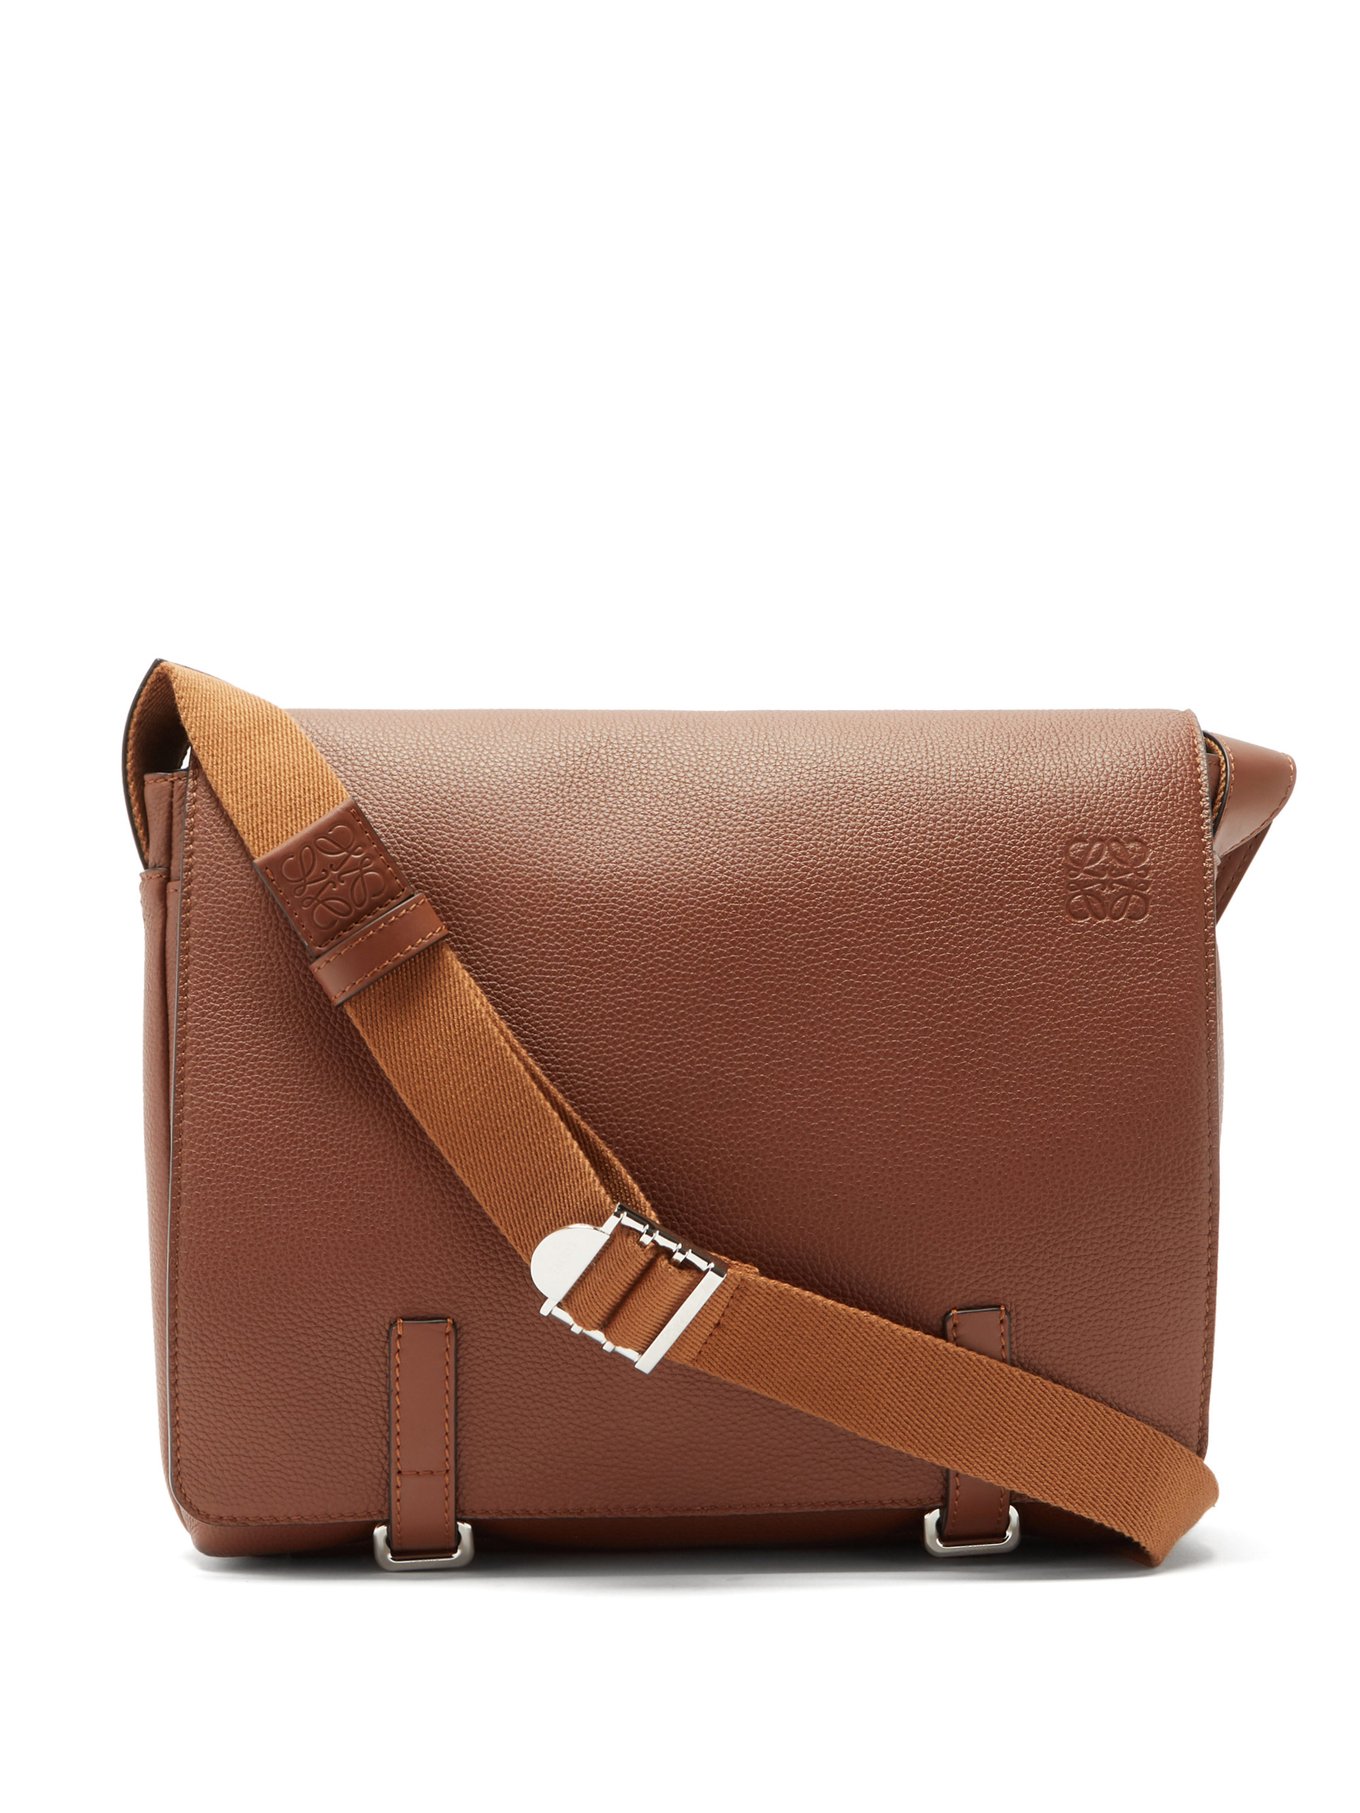 Military leather messenger bag | Loewe